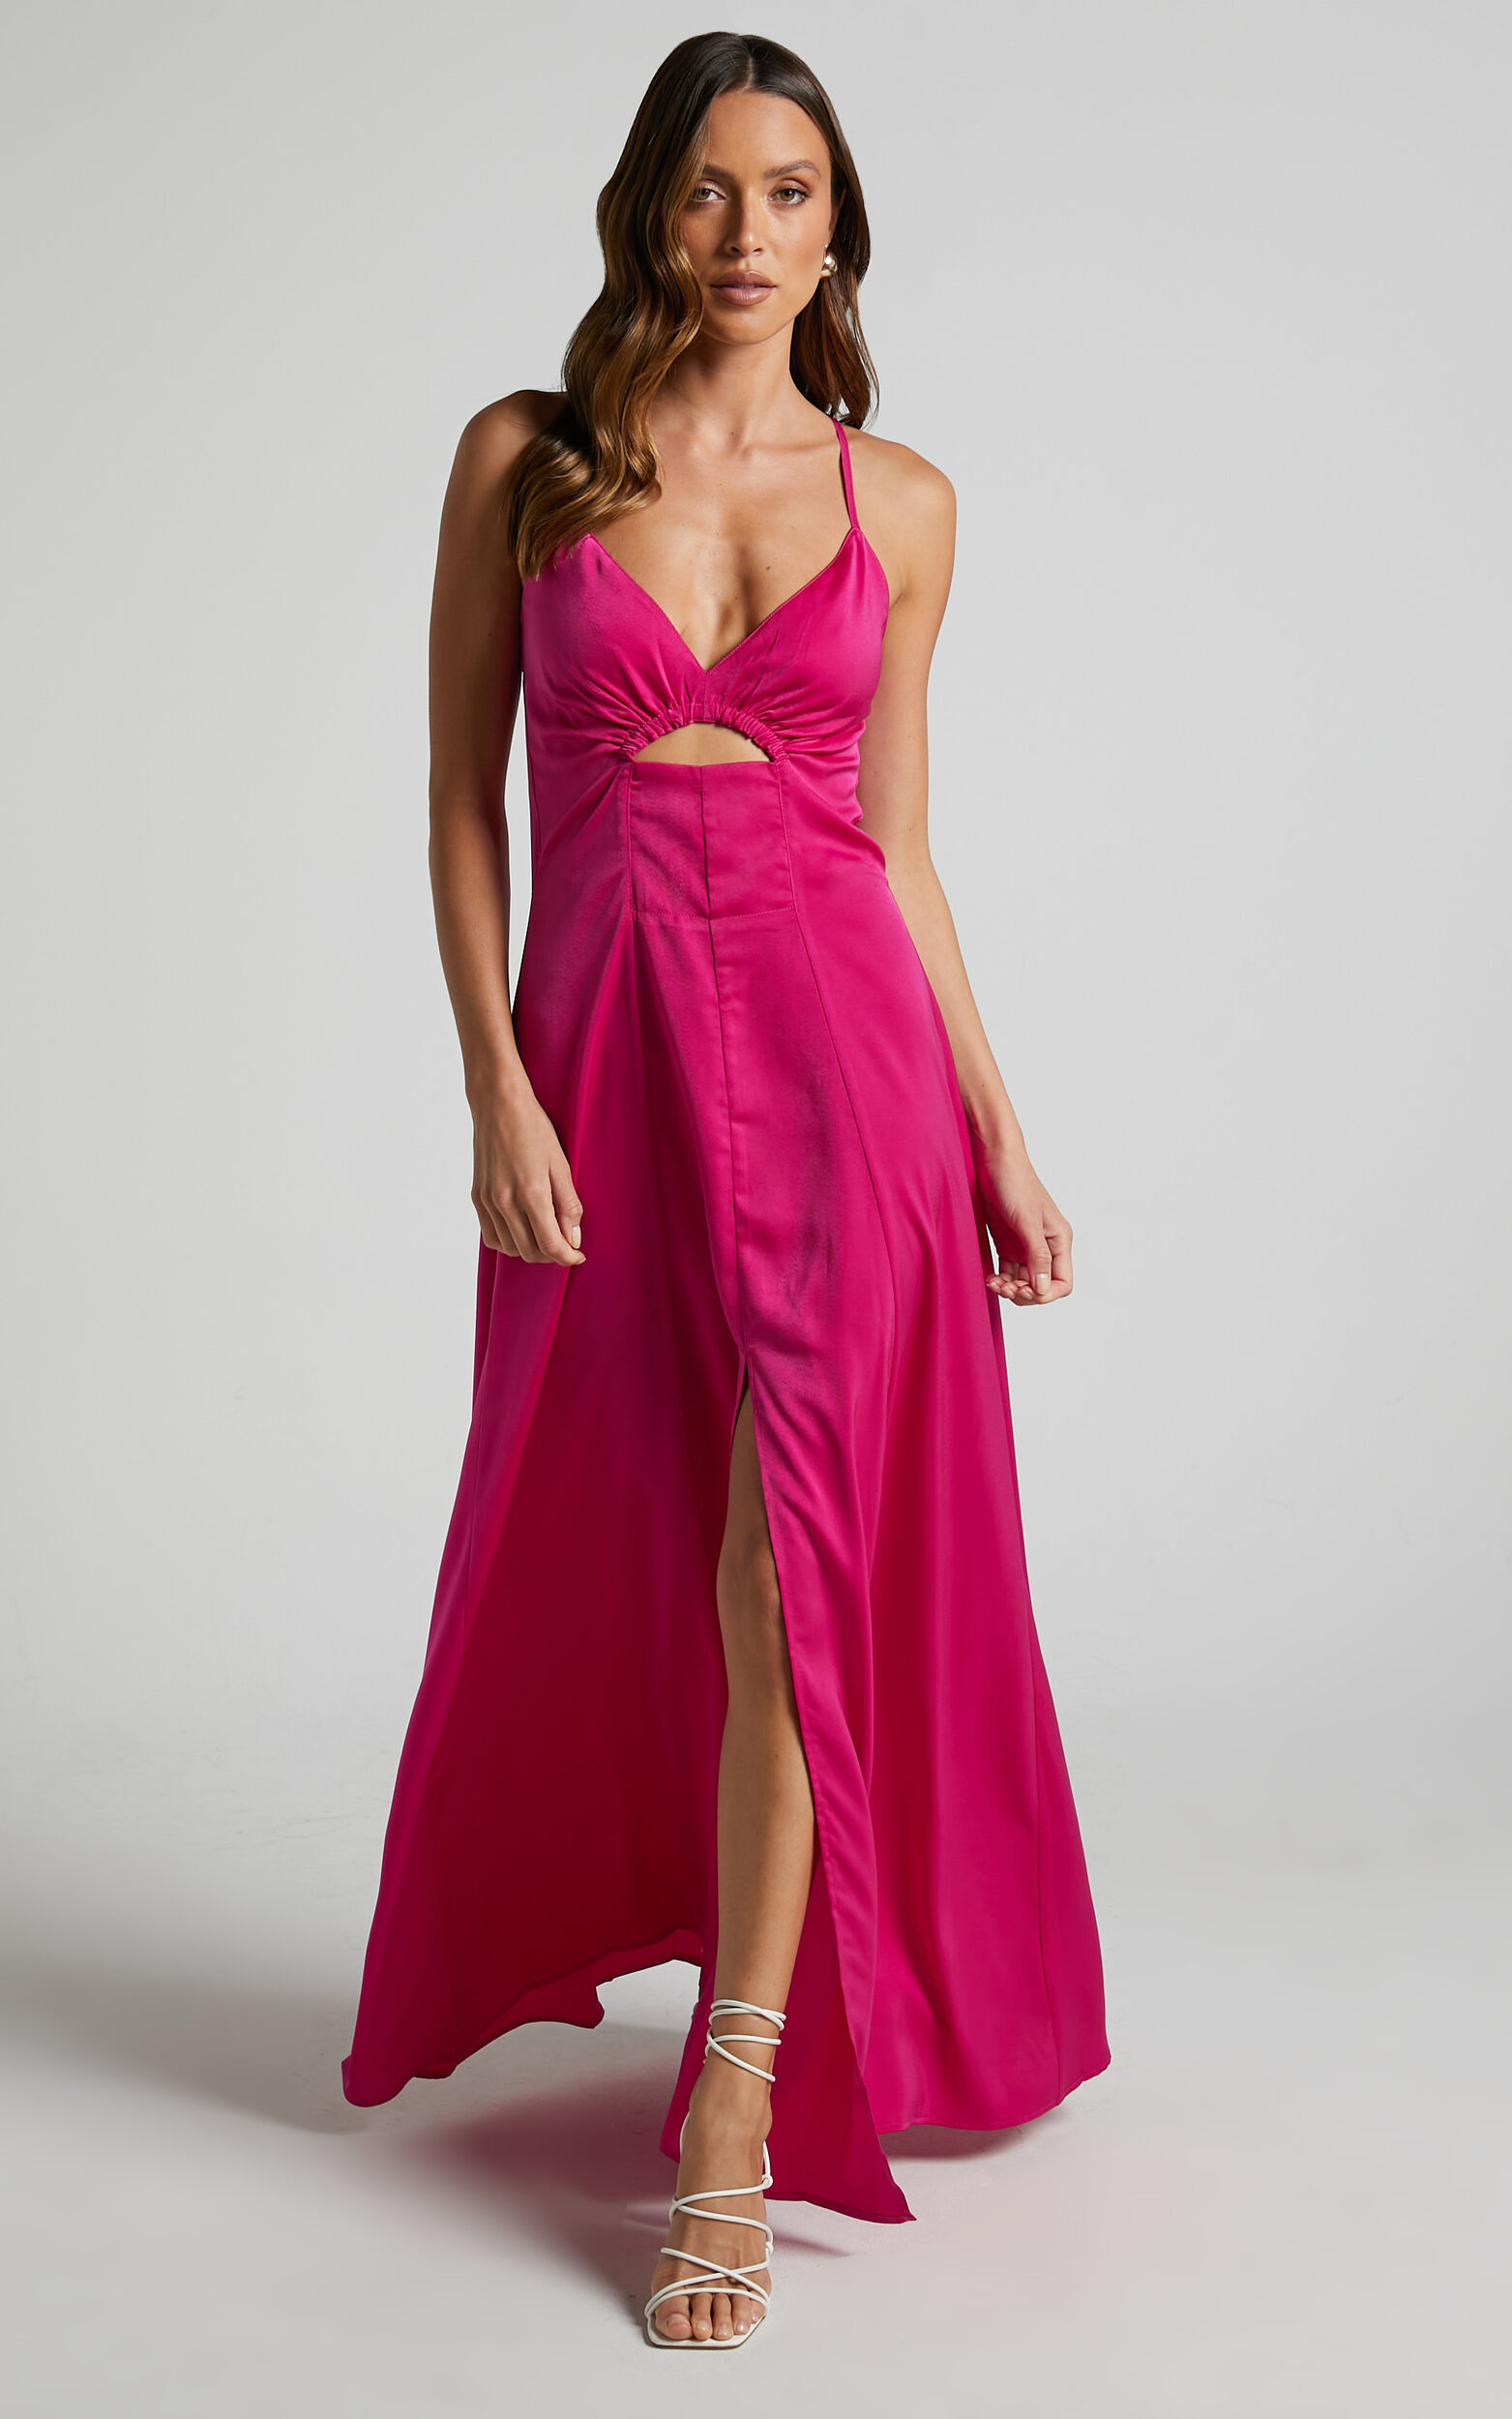 Hazella Midi Dress - V Neck Cut Out Cross Back Satin Dress in Hot Pink ...